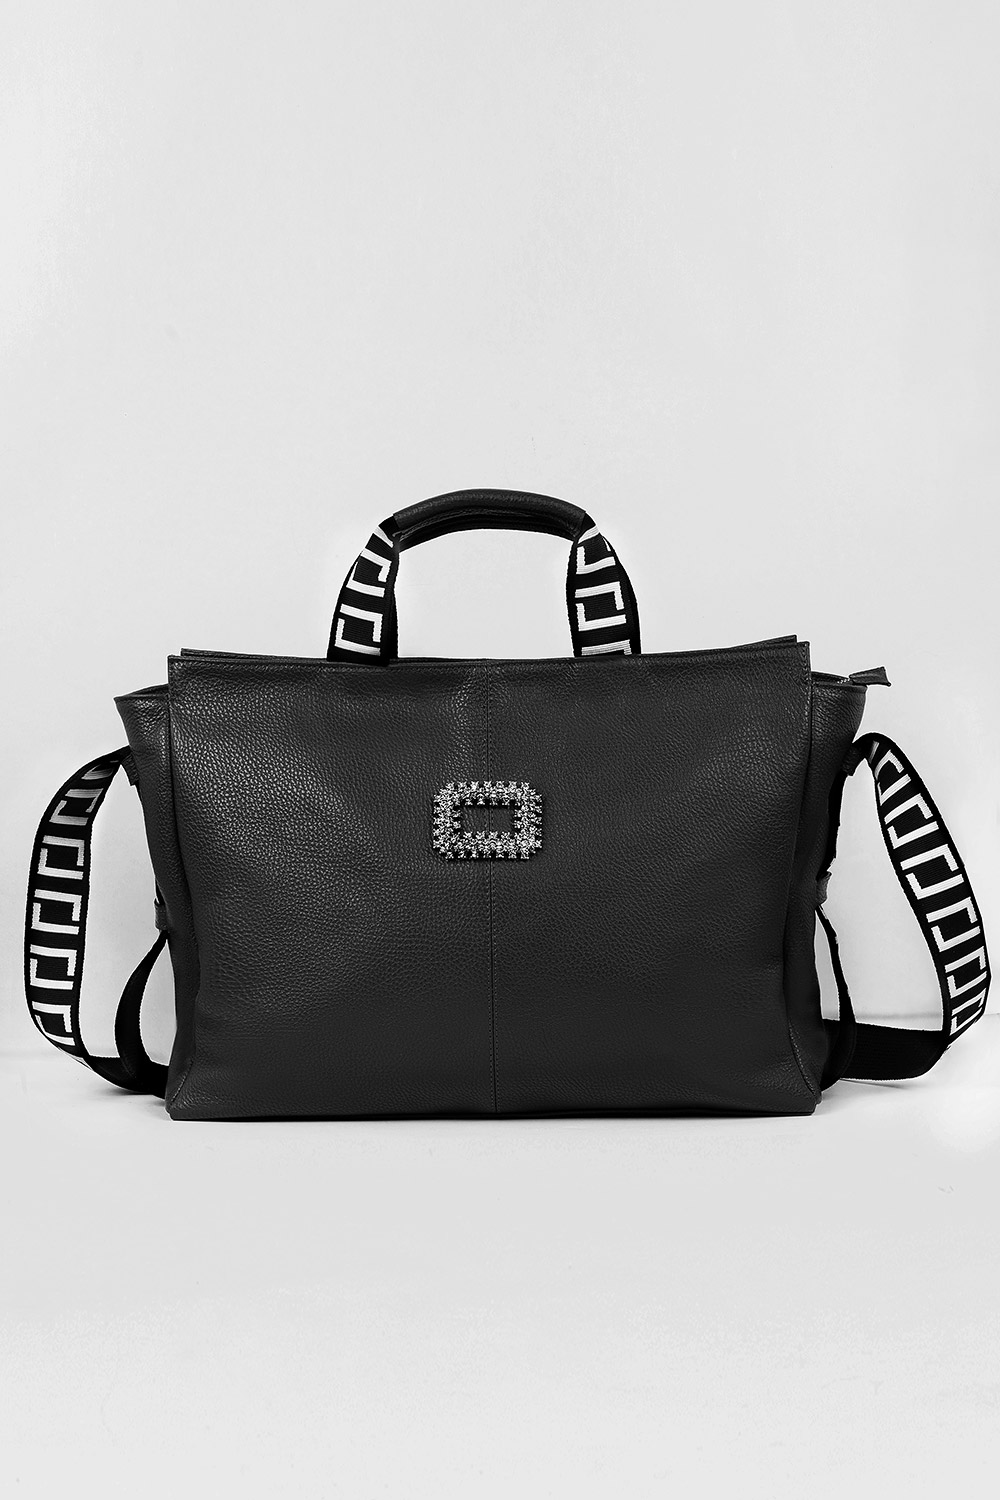 FERGIE Leather Bag Black